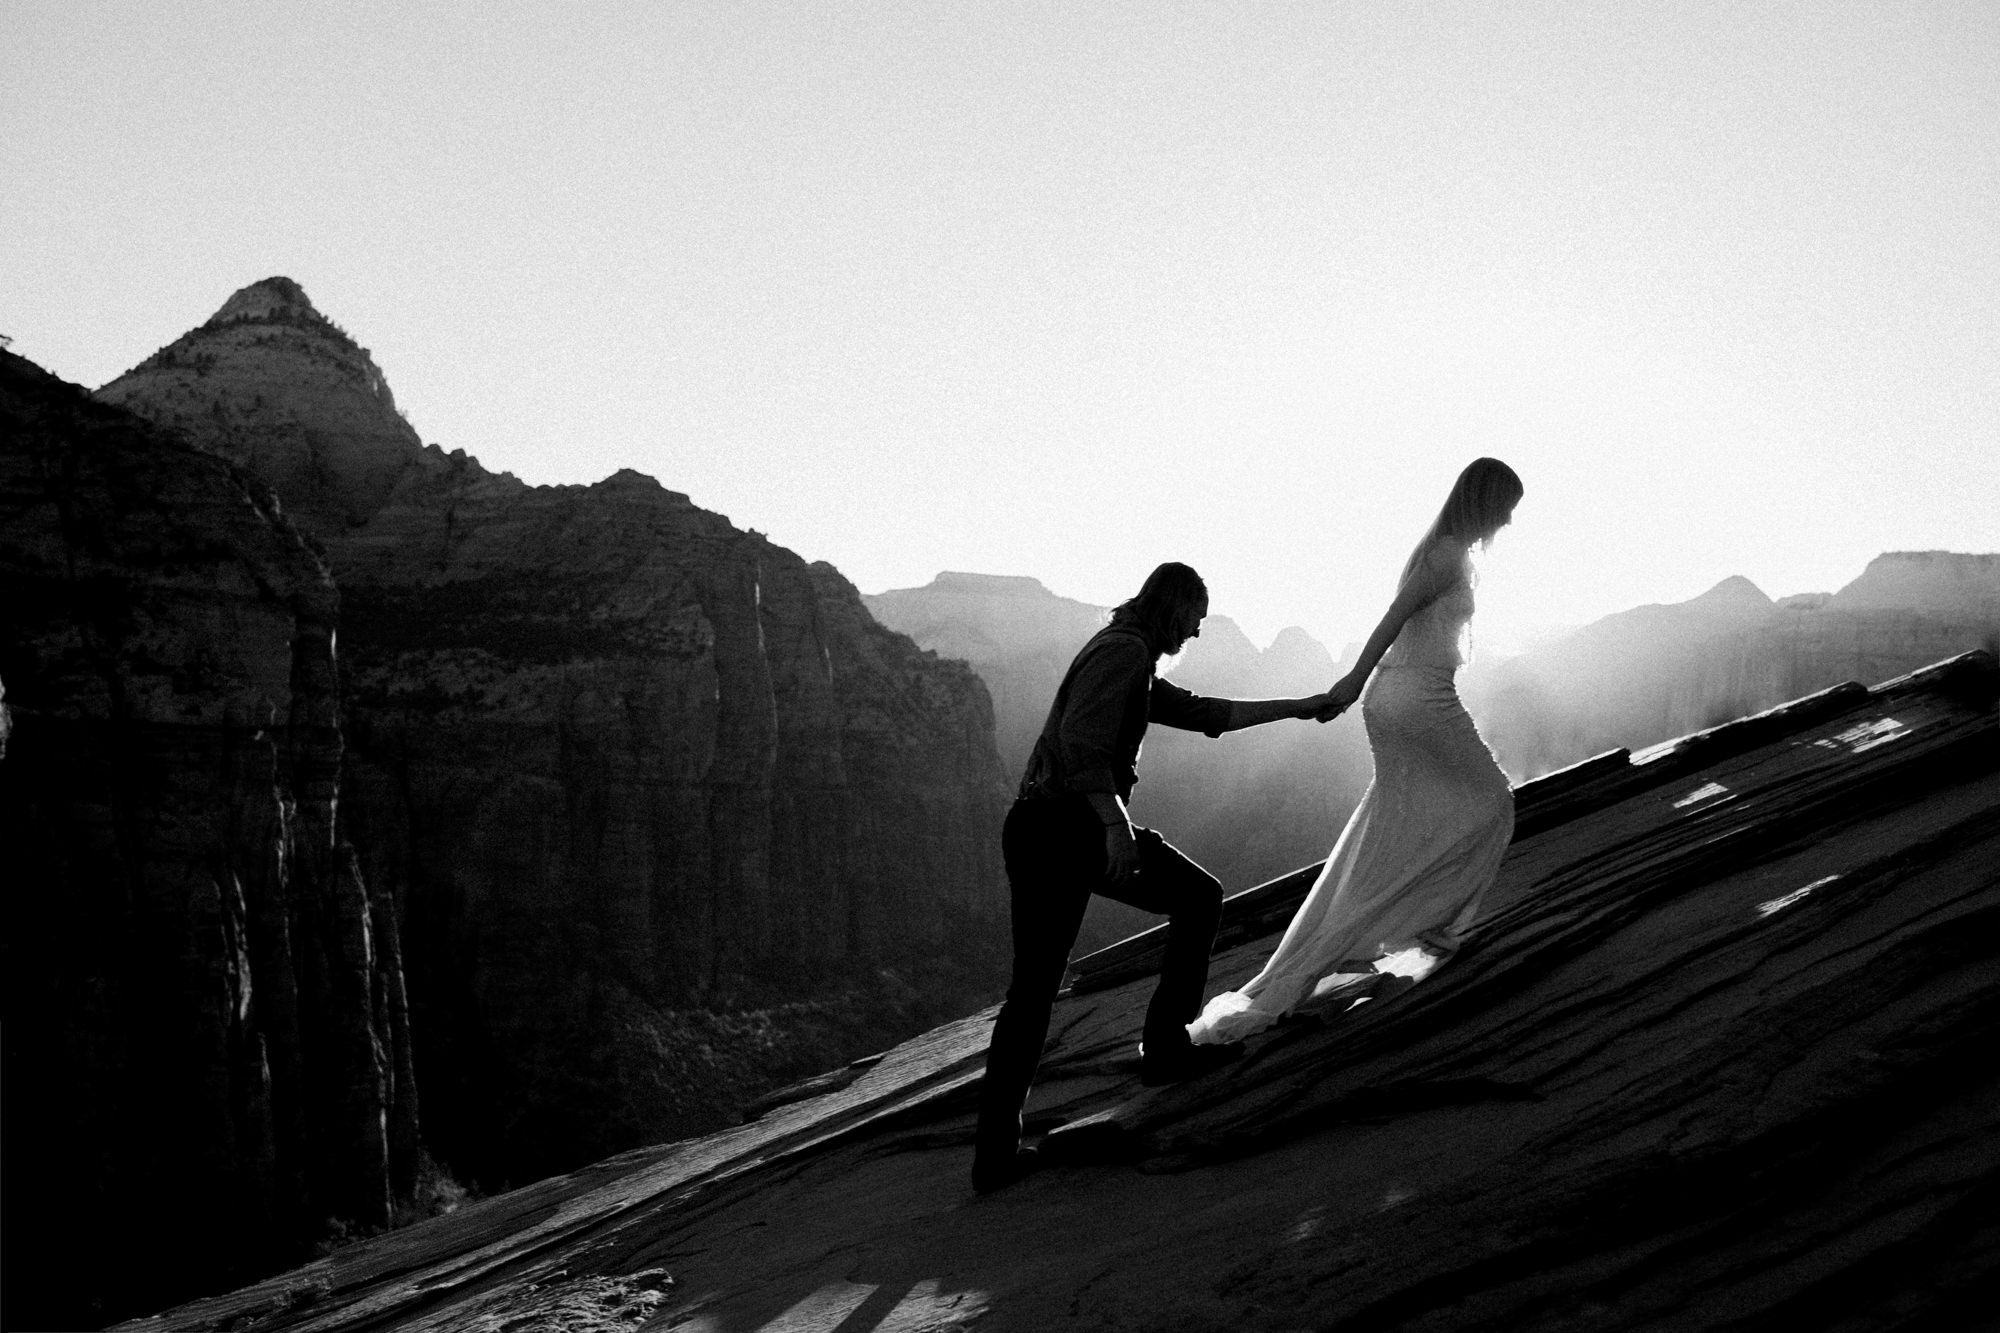 las vegas elopement at the neon museum | bhldn bride | sunset wedding portraits at zion national park | utah adventure wedding photographer | the hearnes adventure photography | www.thehearnes.com